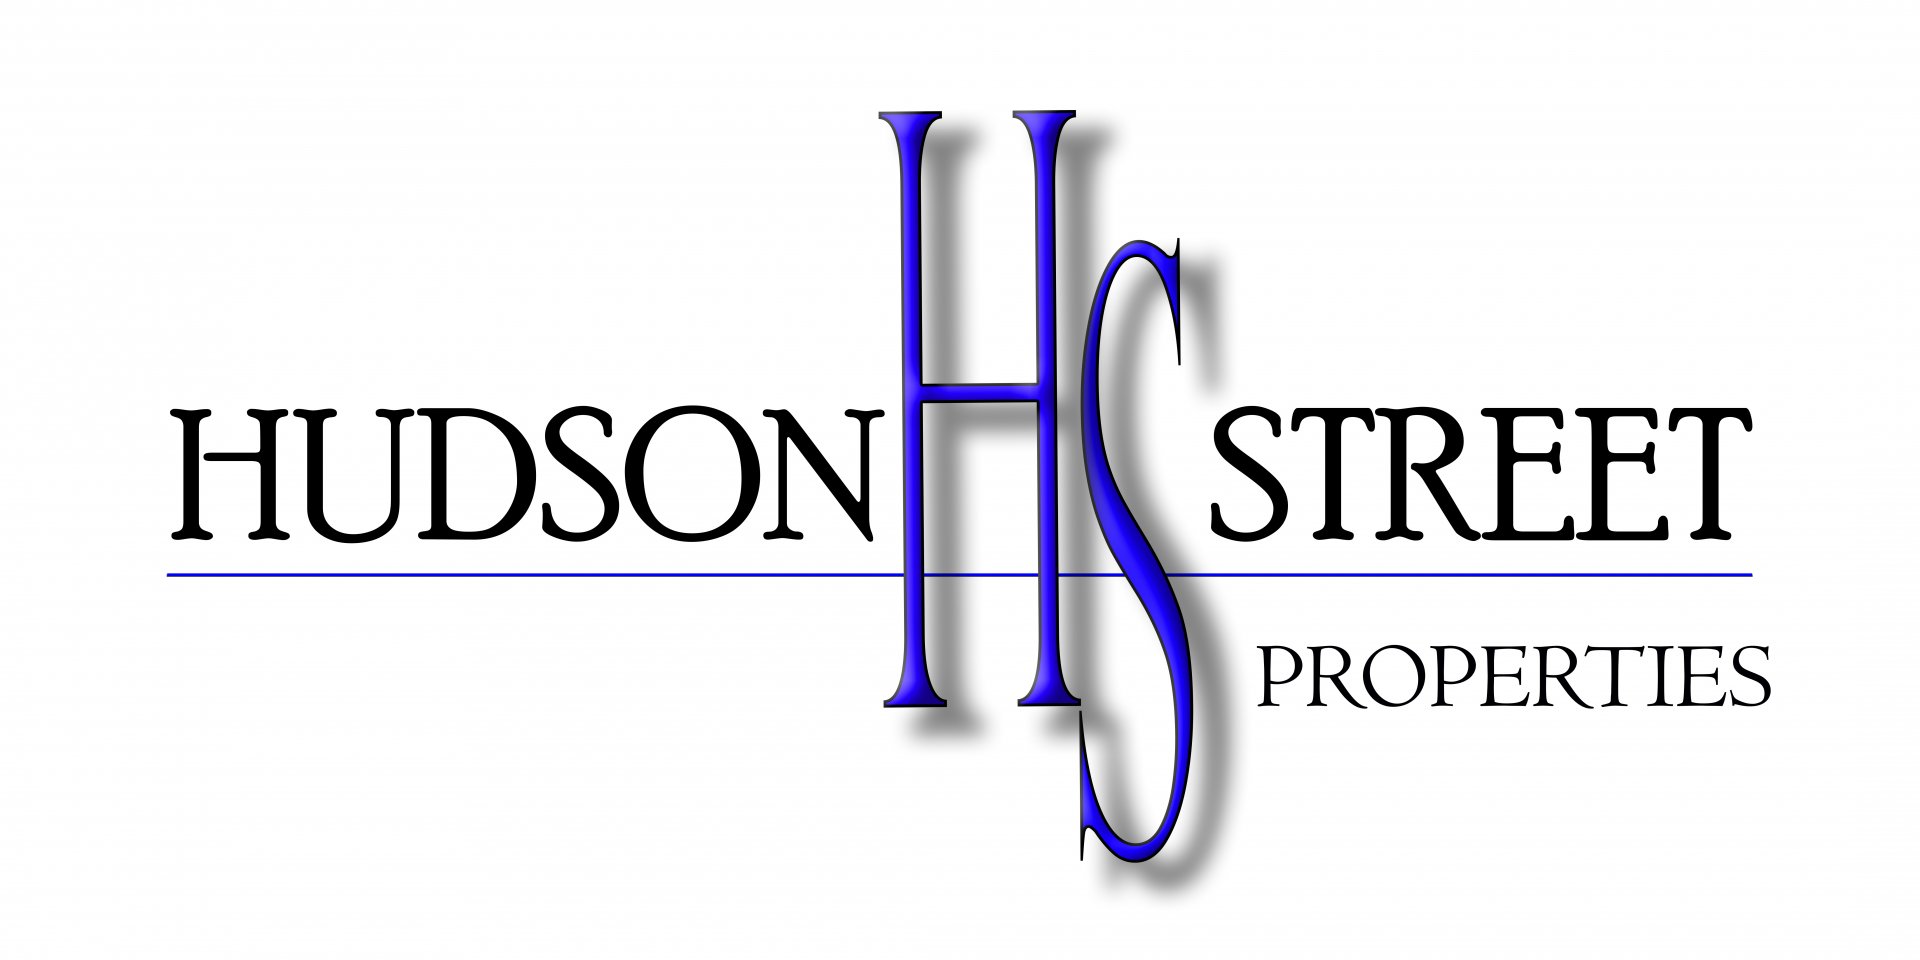 Hudson Street Properties logo